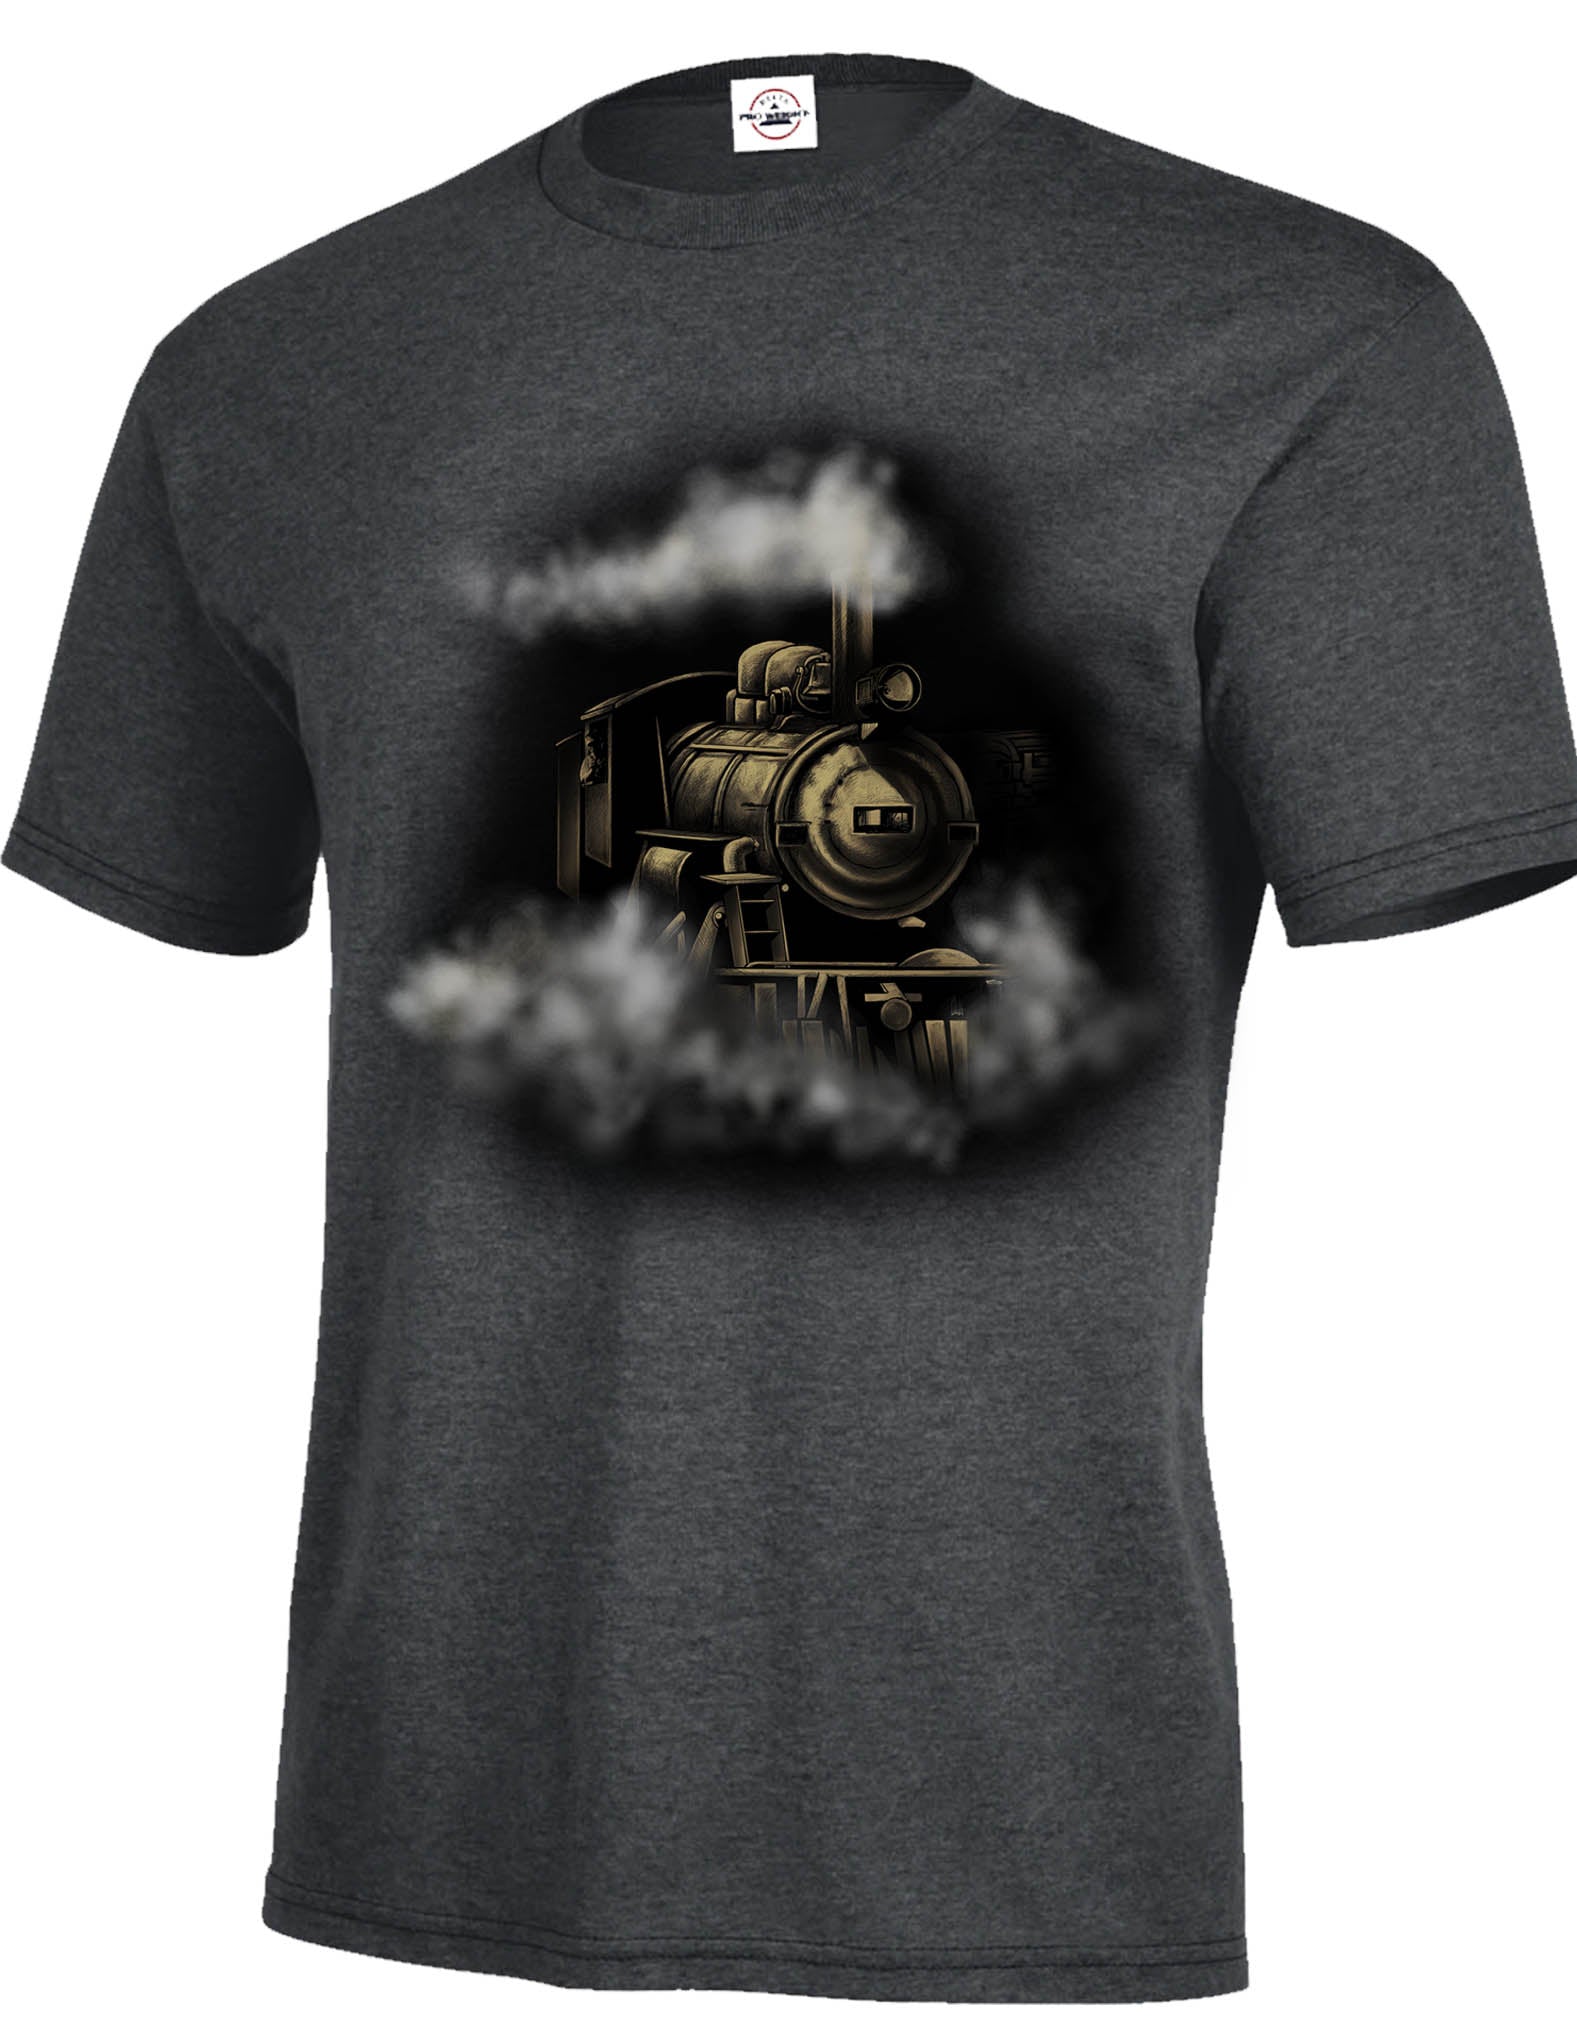 Steam Engine T-Shirt - charcoal heather t-shirt with steam engine art